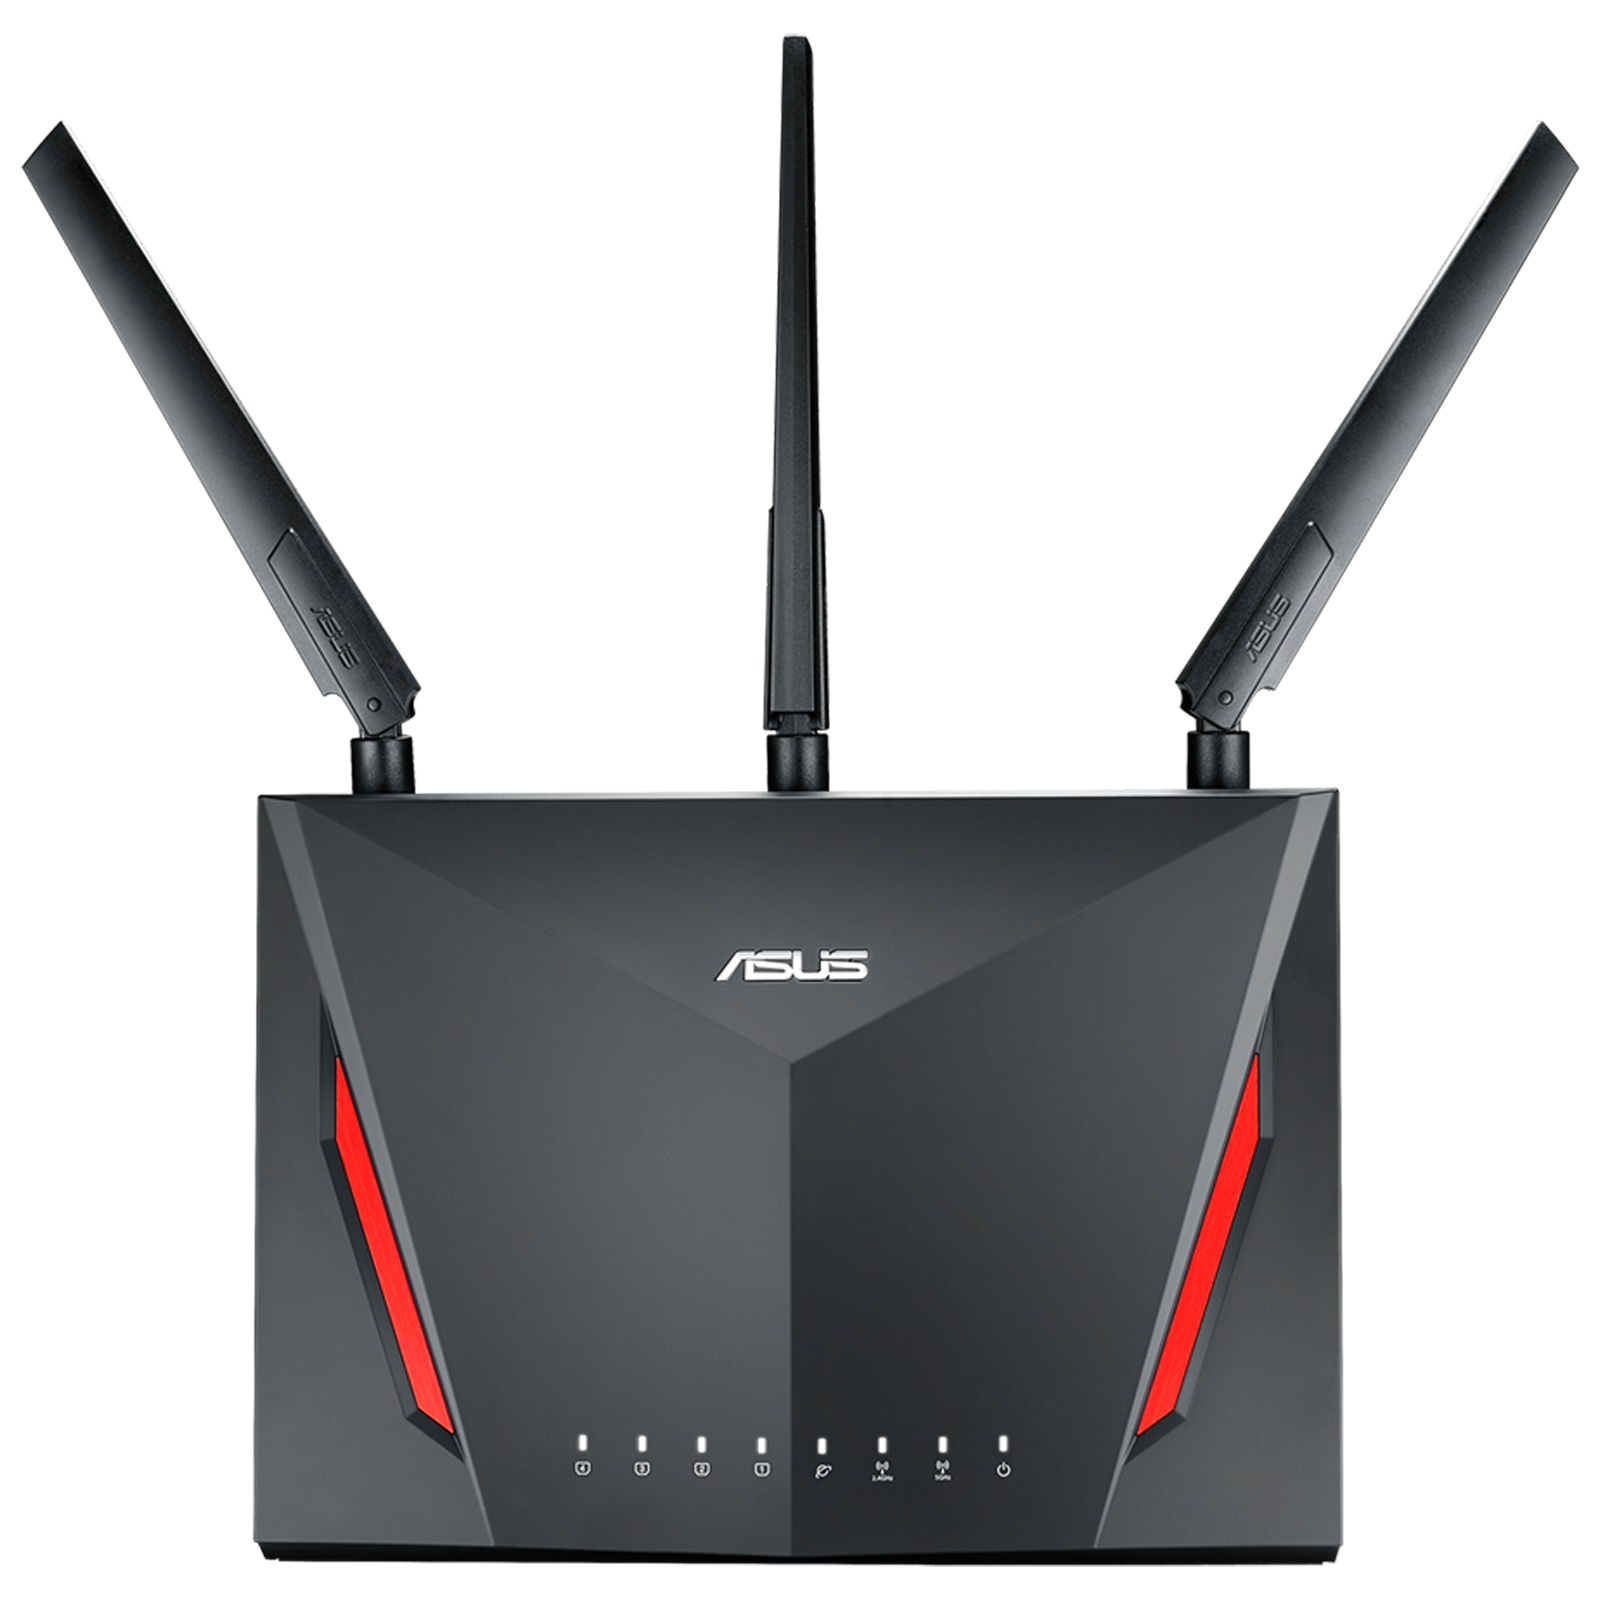 Asus AC2900 Dual Band 2167 Mbps WiFi Router (4 Antennas, 4 LAN Ports, AiProtection Pro, RT-AC86U, Black)_1